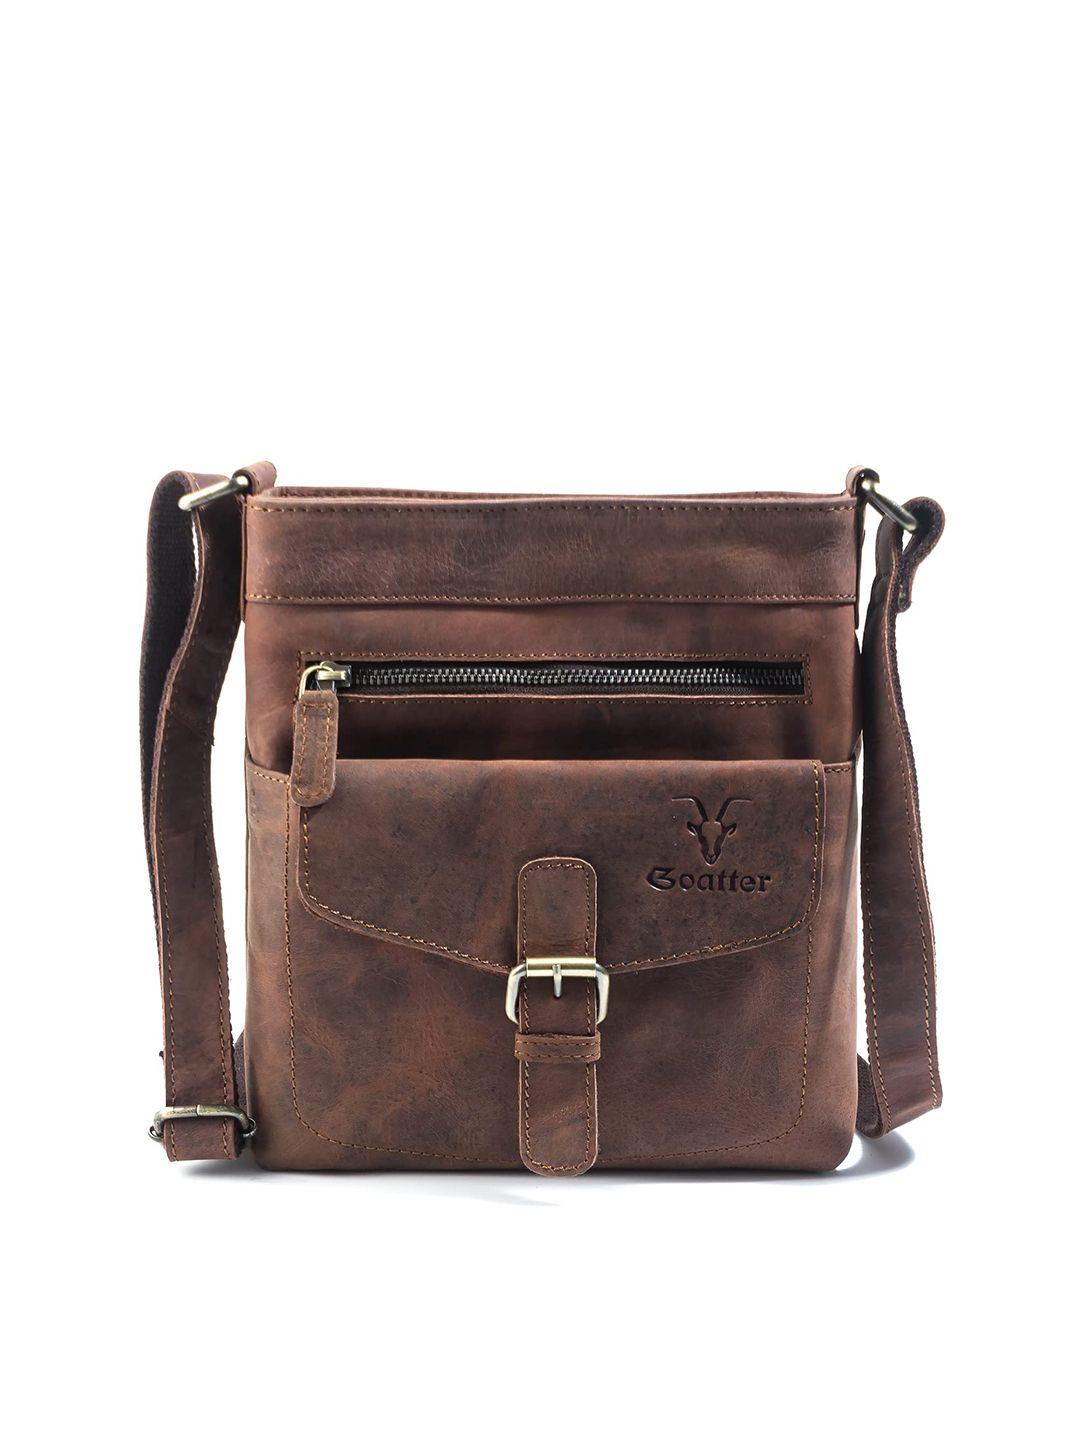 goatter unisex brown & silver-toned messenger bag